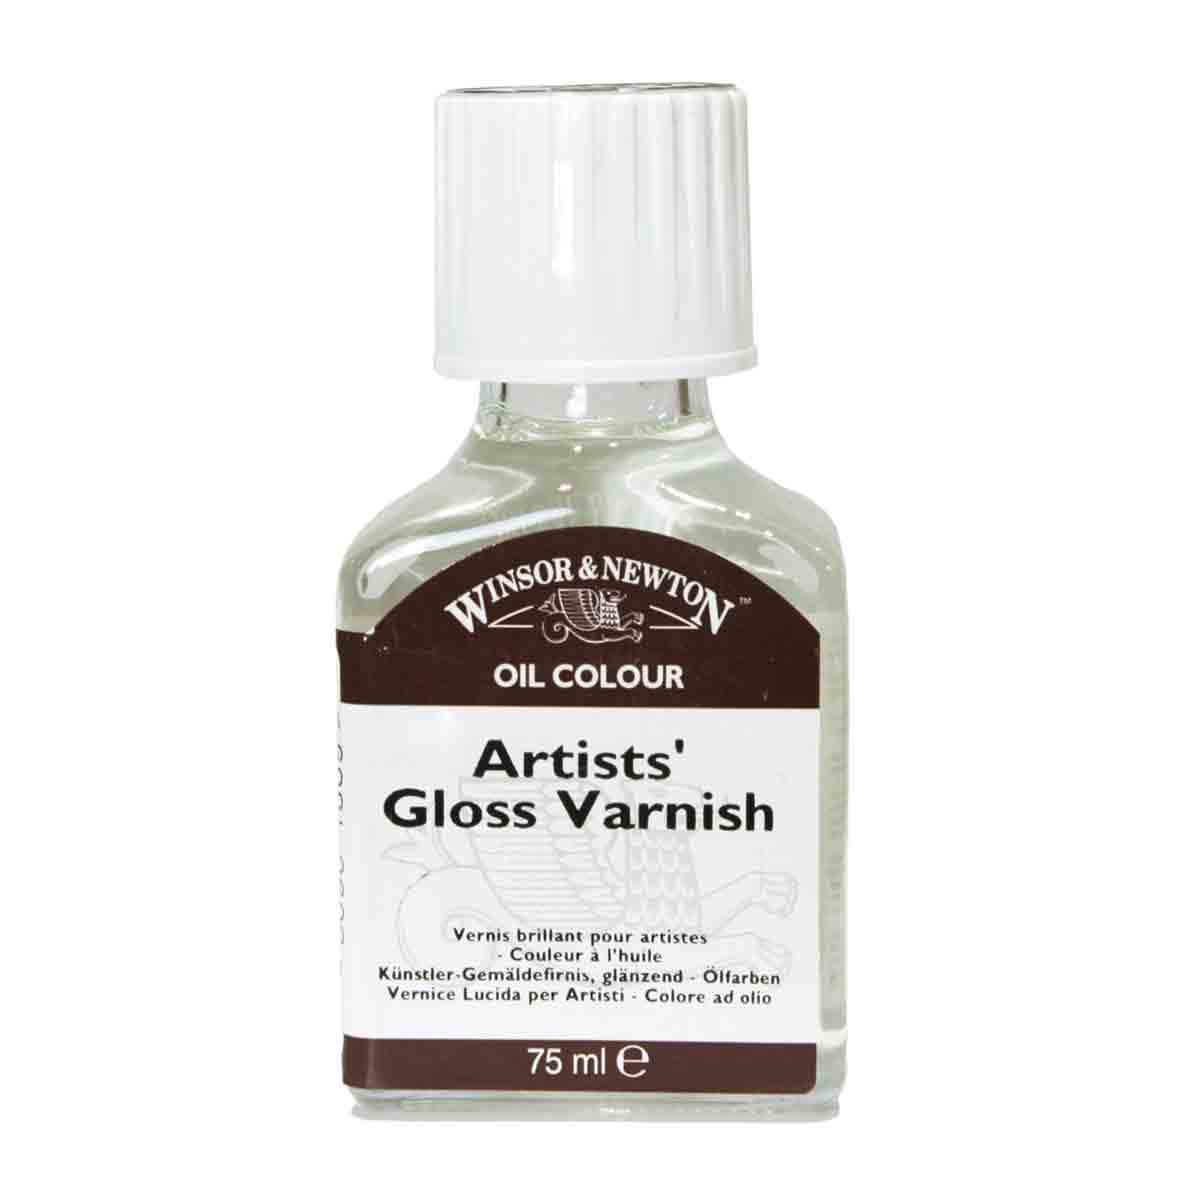 Winsor & Newton Artists' Gloss Varnish 250 ml